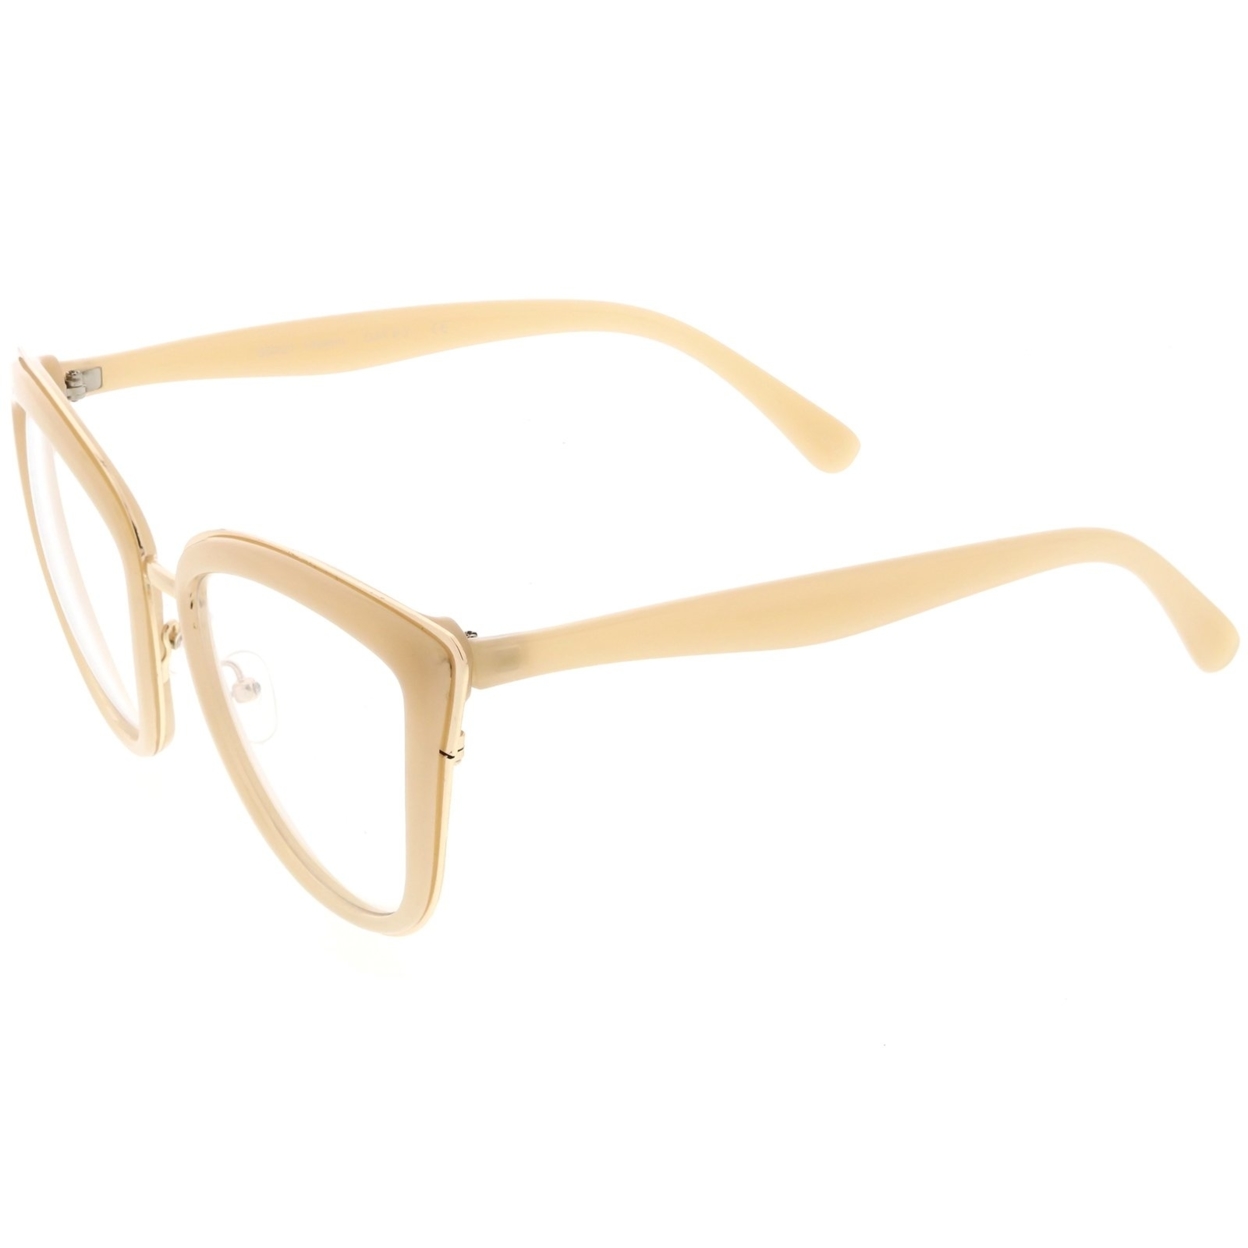 Oversize Rimmed Metal Cat Eye Glasses Clear Lens 55mm - Creme Gold / Clear